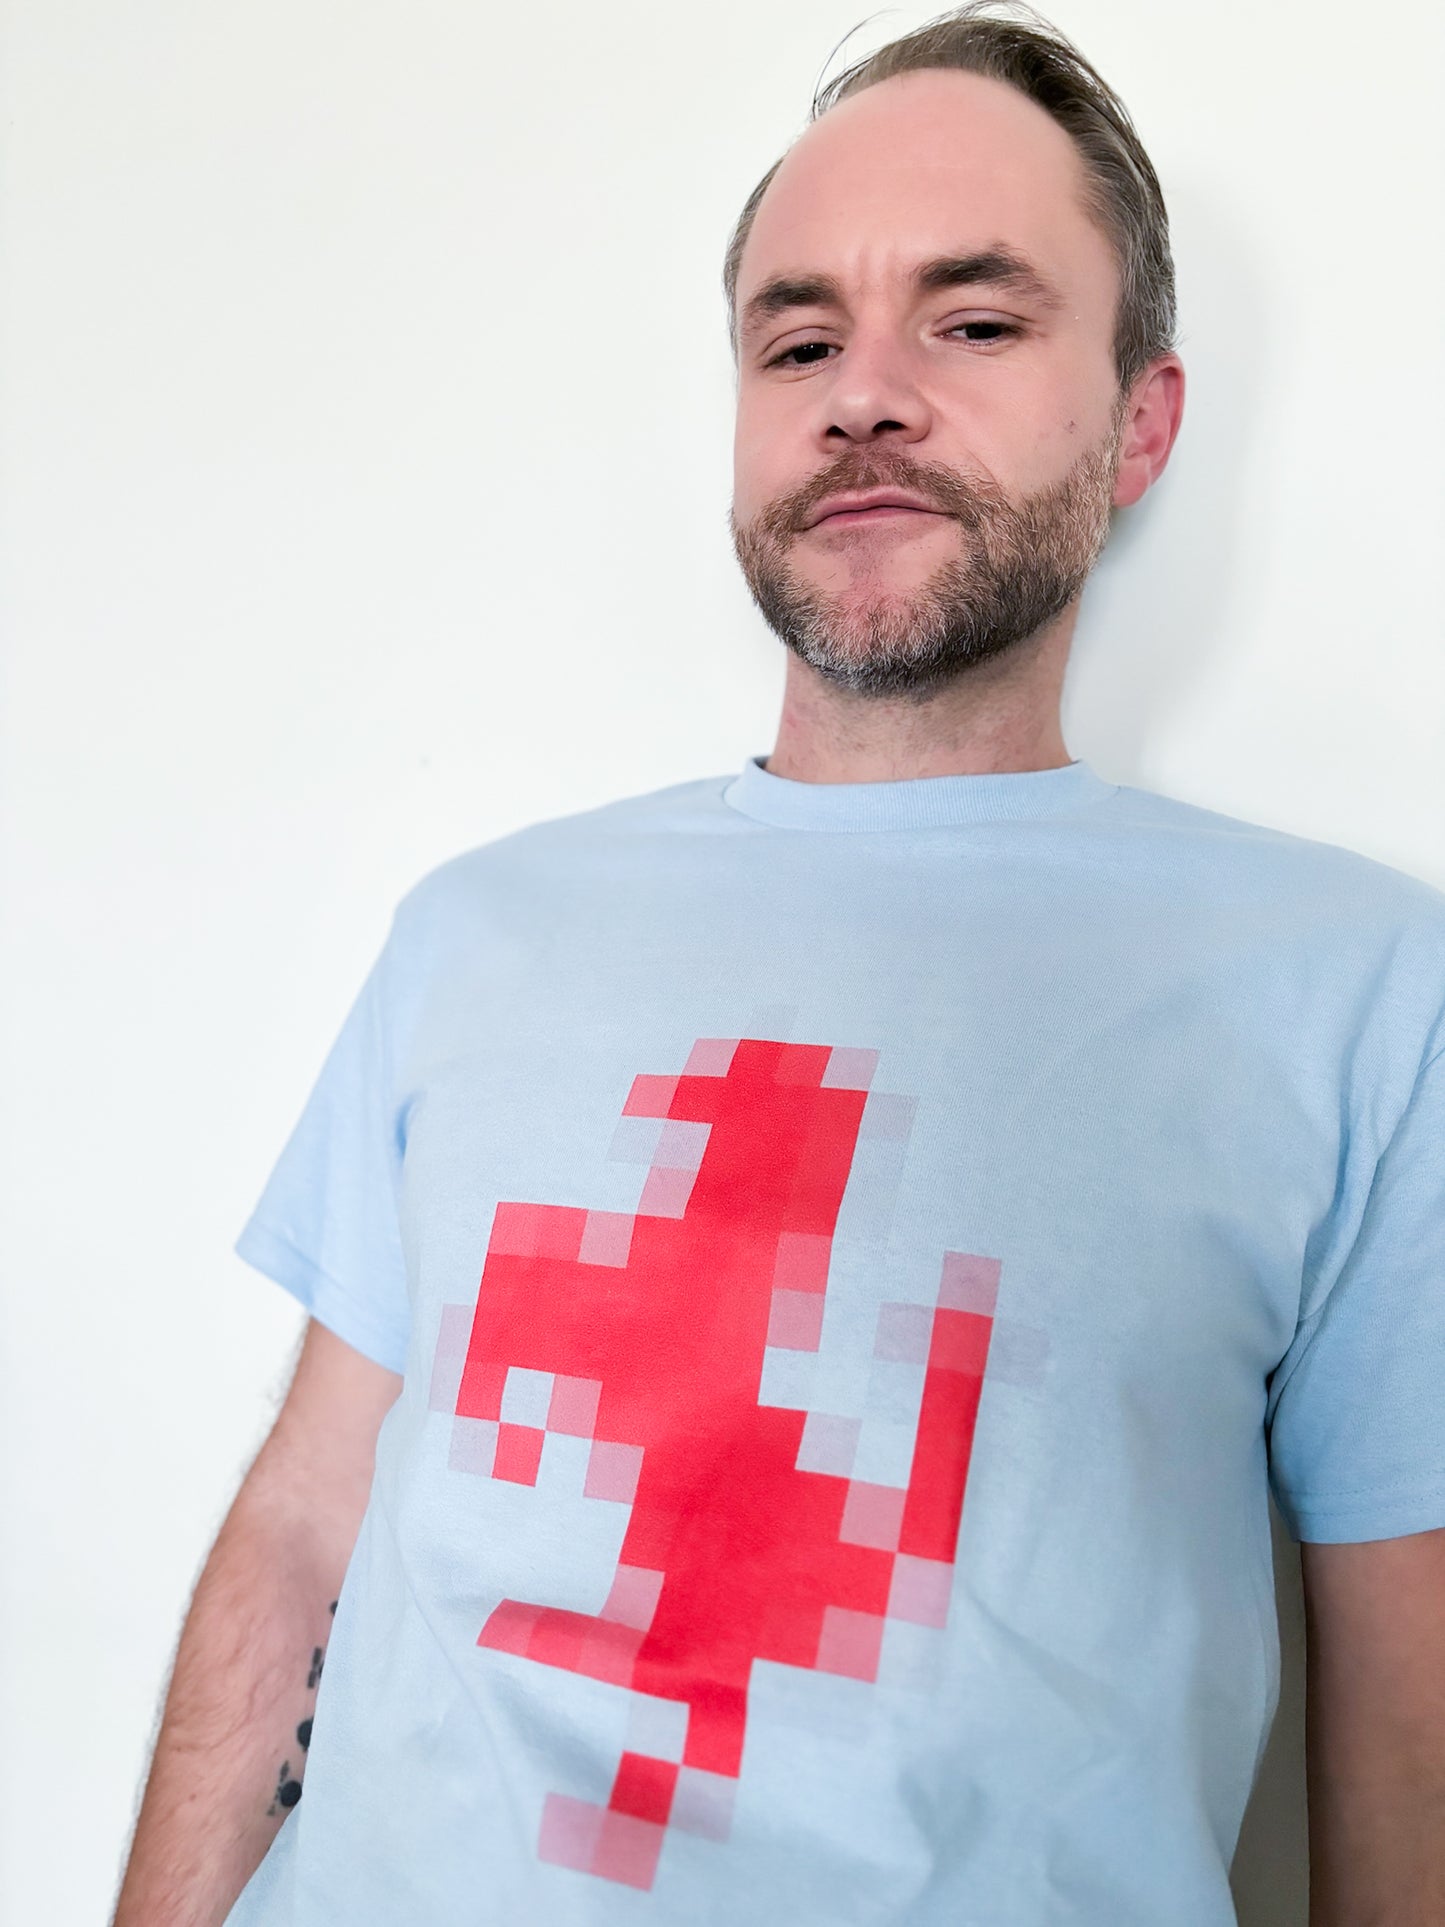 Pixelating Horse (red) - Unisex T-shirt